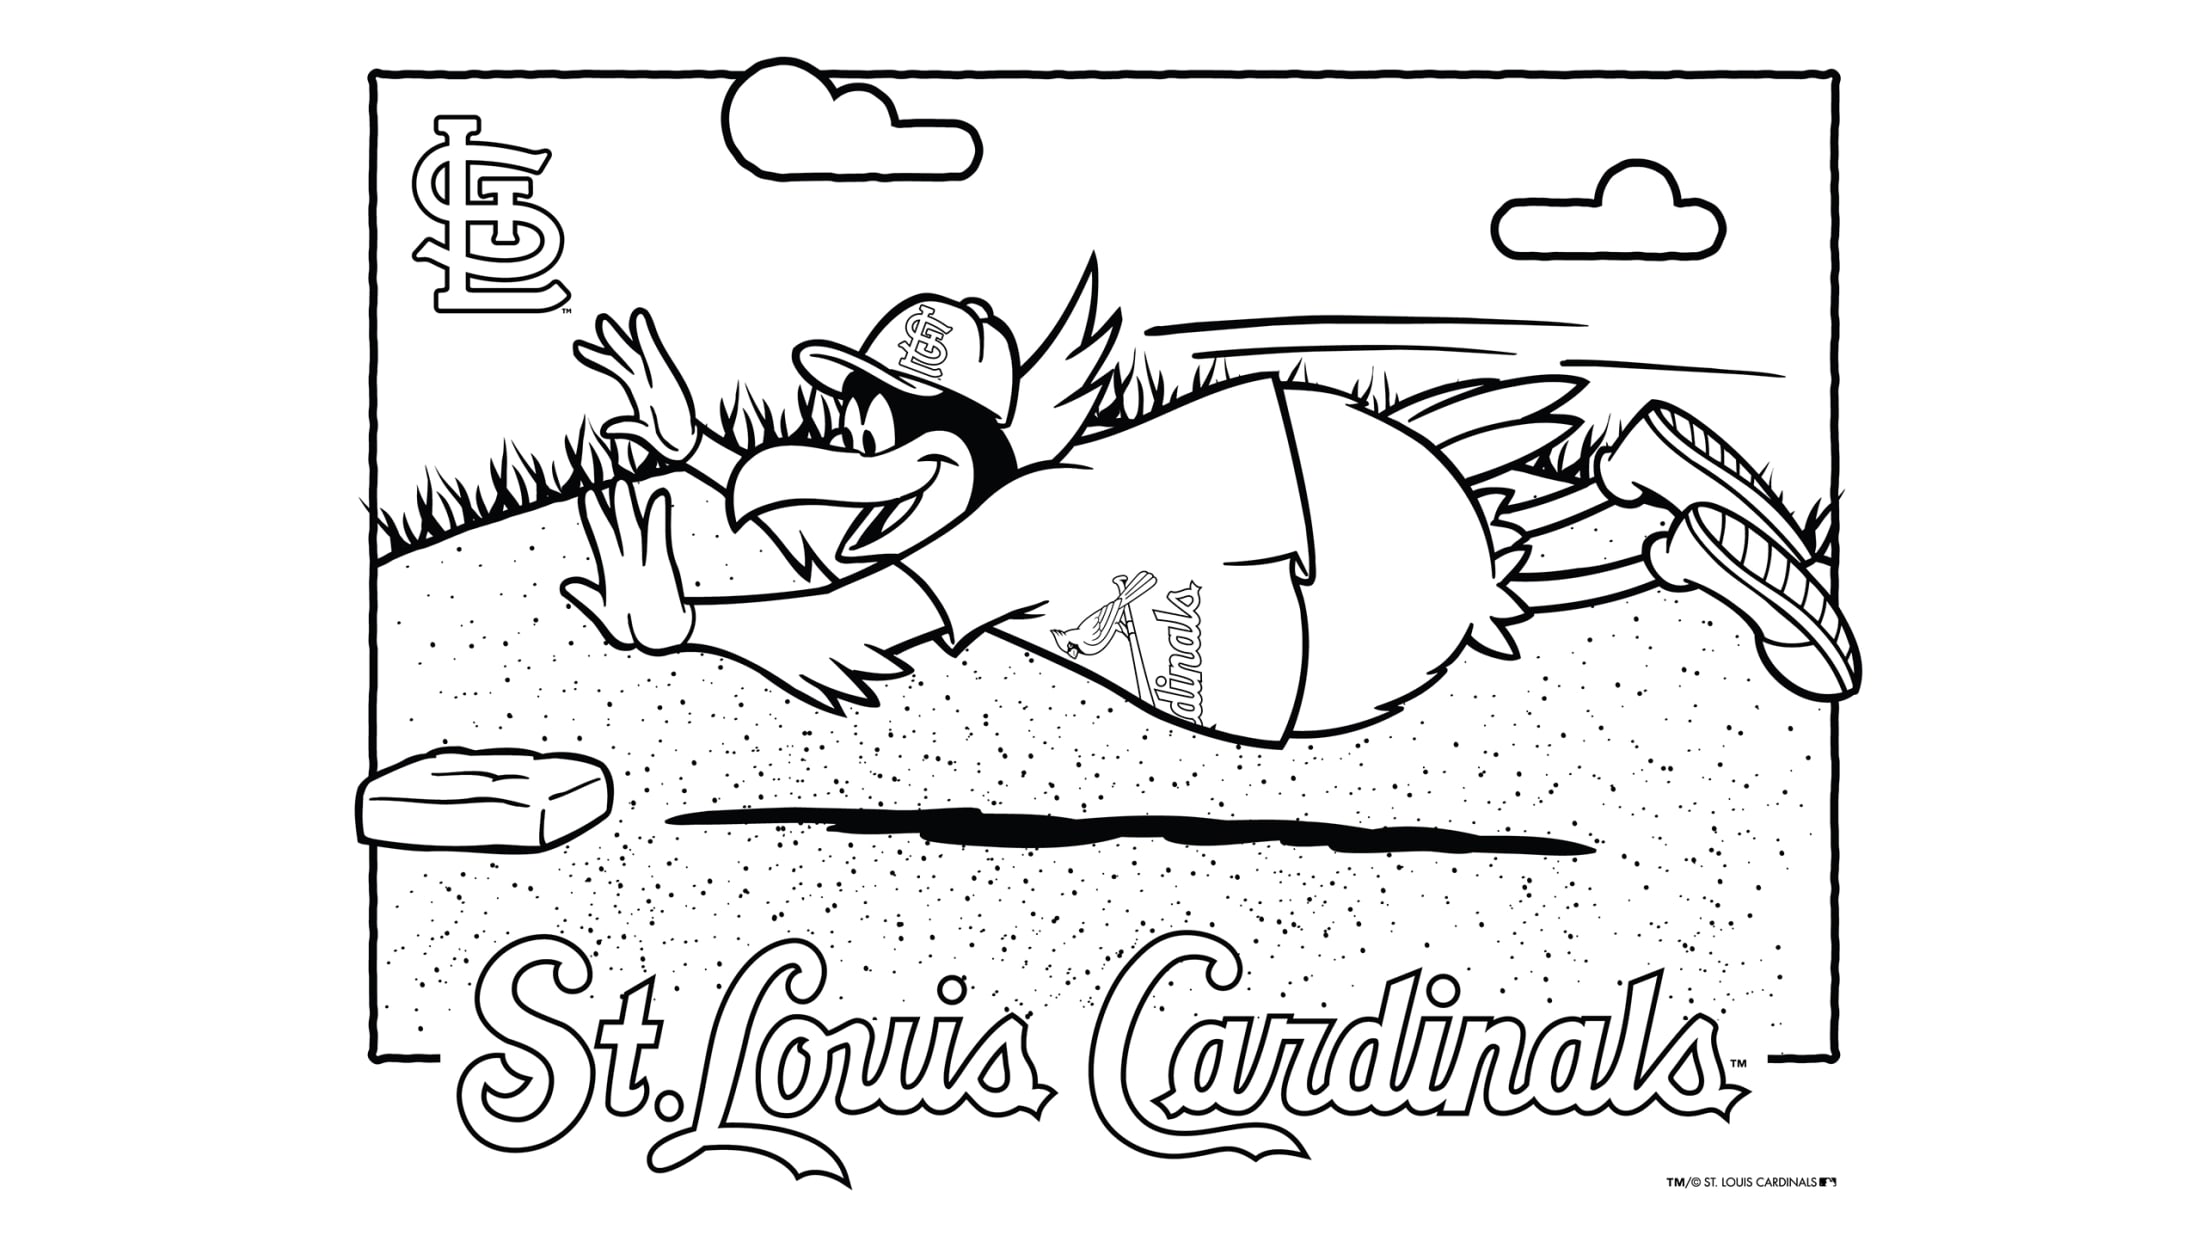 Fredbird Activities  St. Louis Cardinals